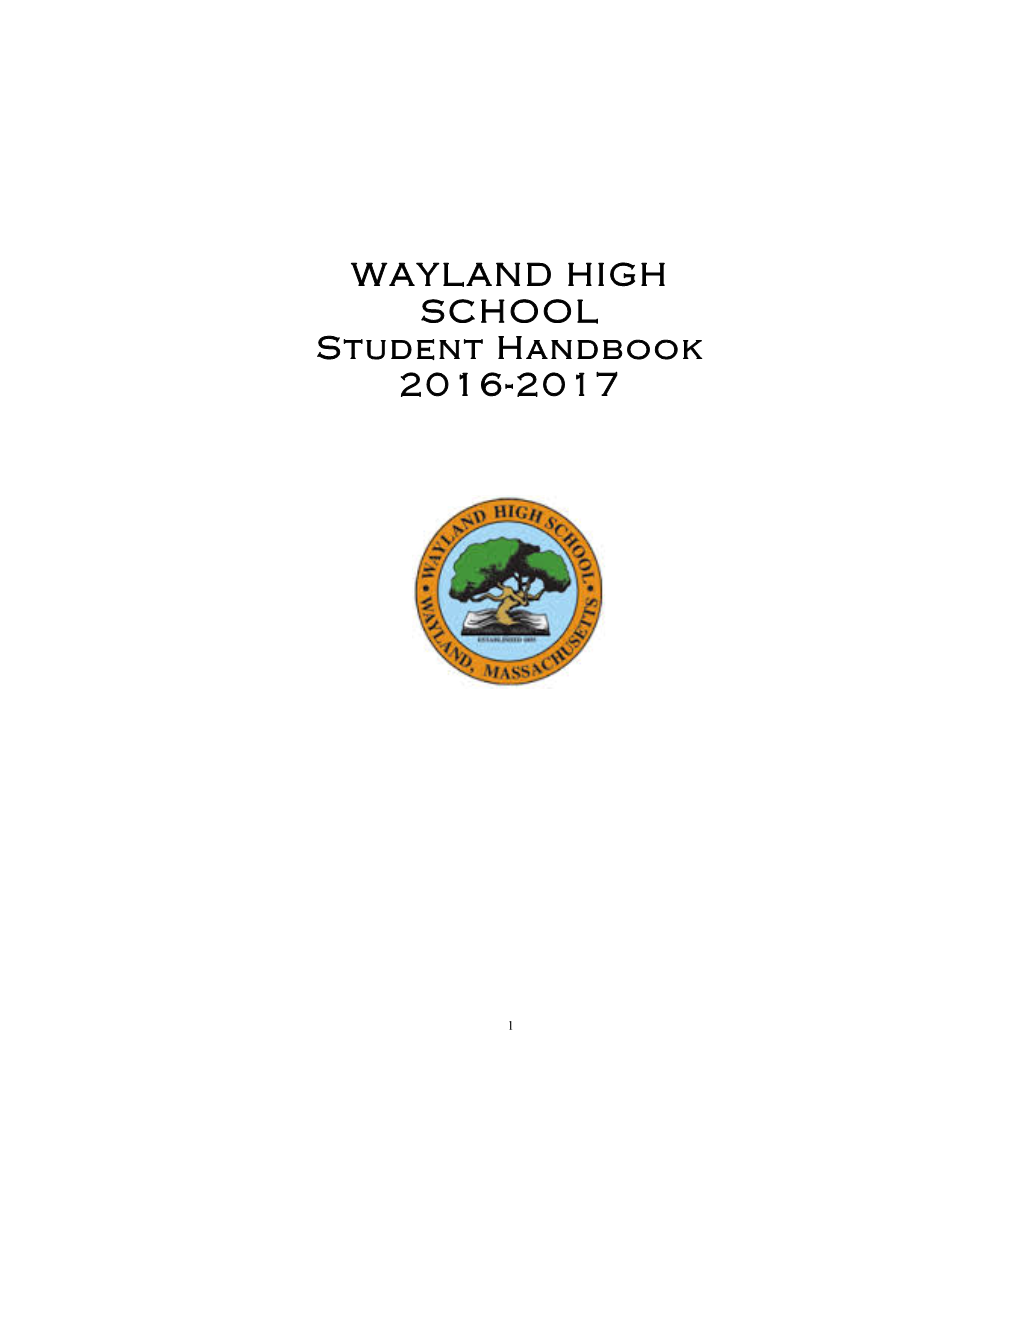 WAYLAND HIGH SCHOOL Student Handbook 2016-2017